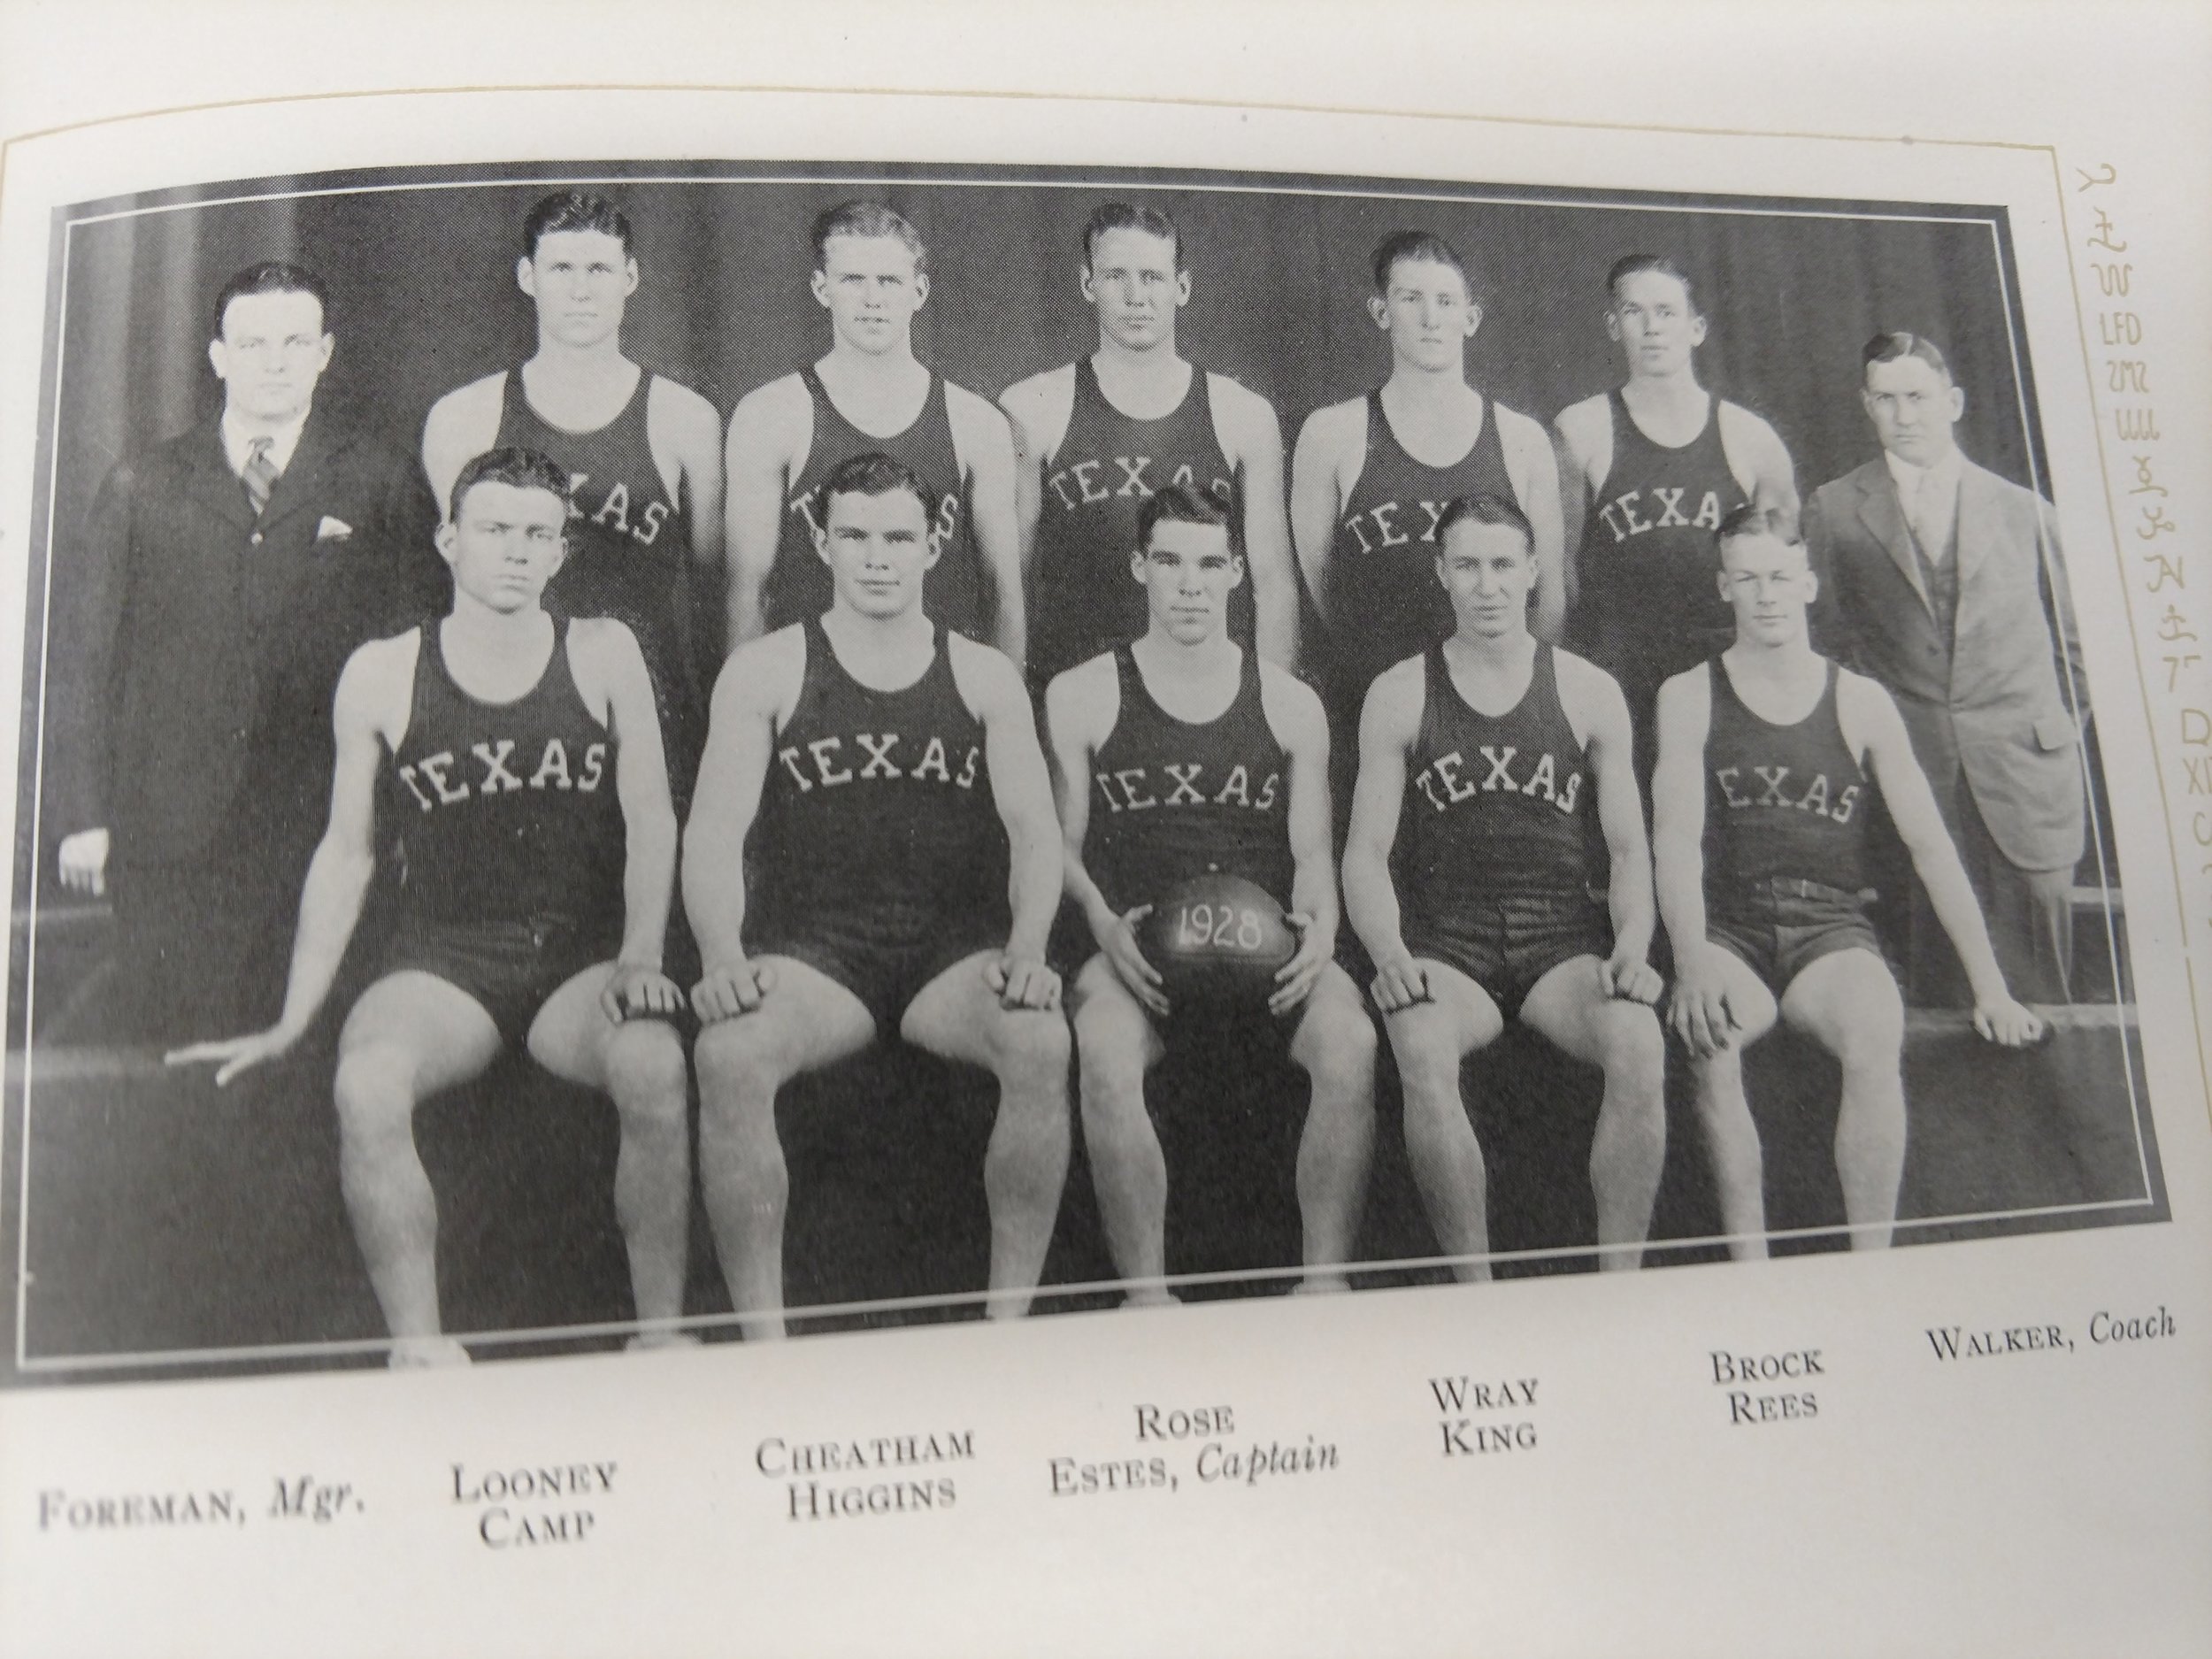 1928 team